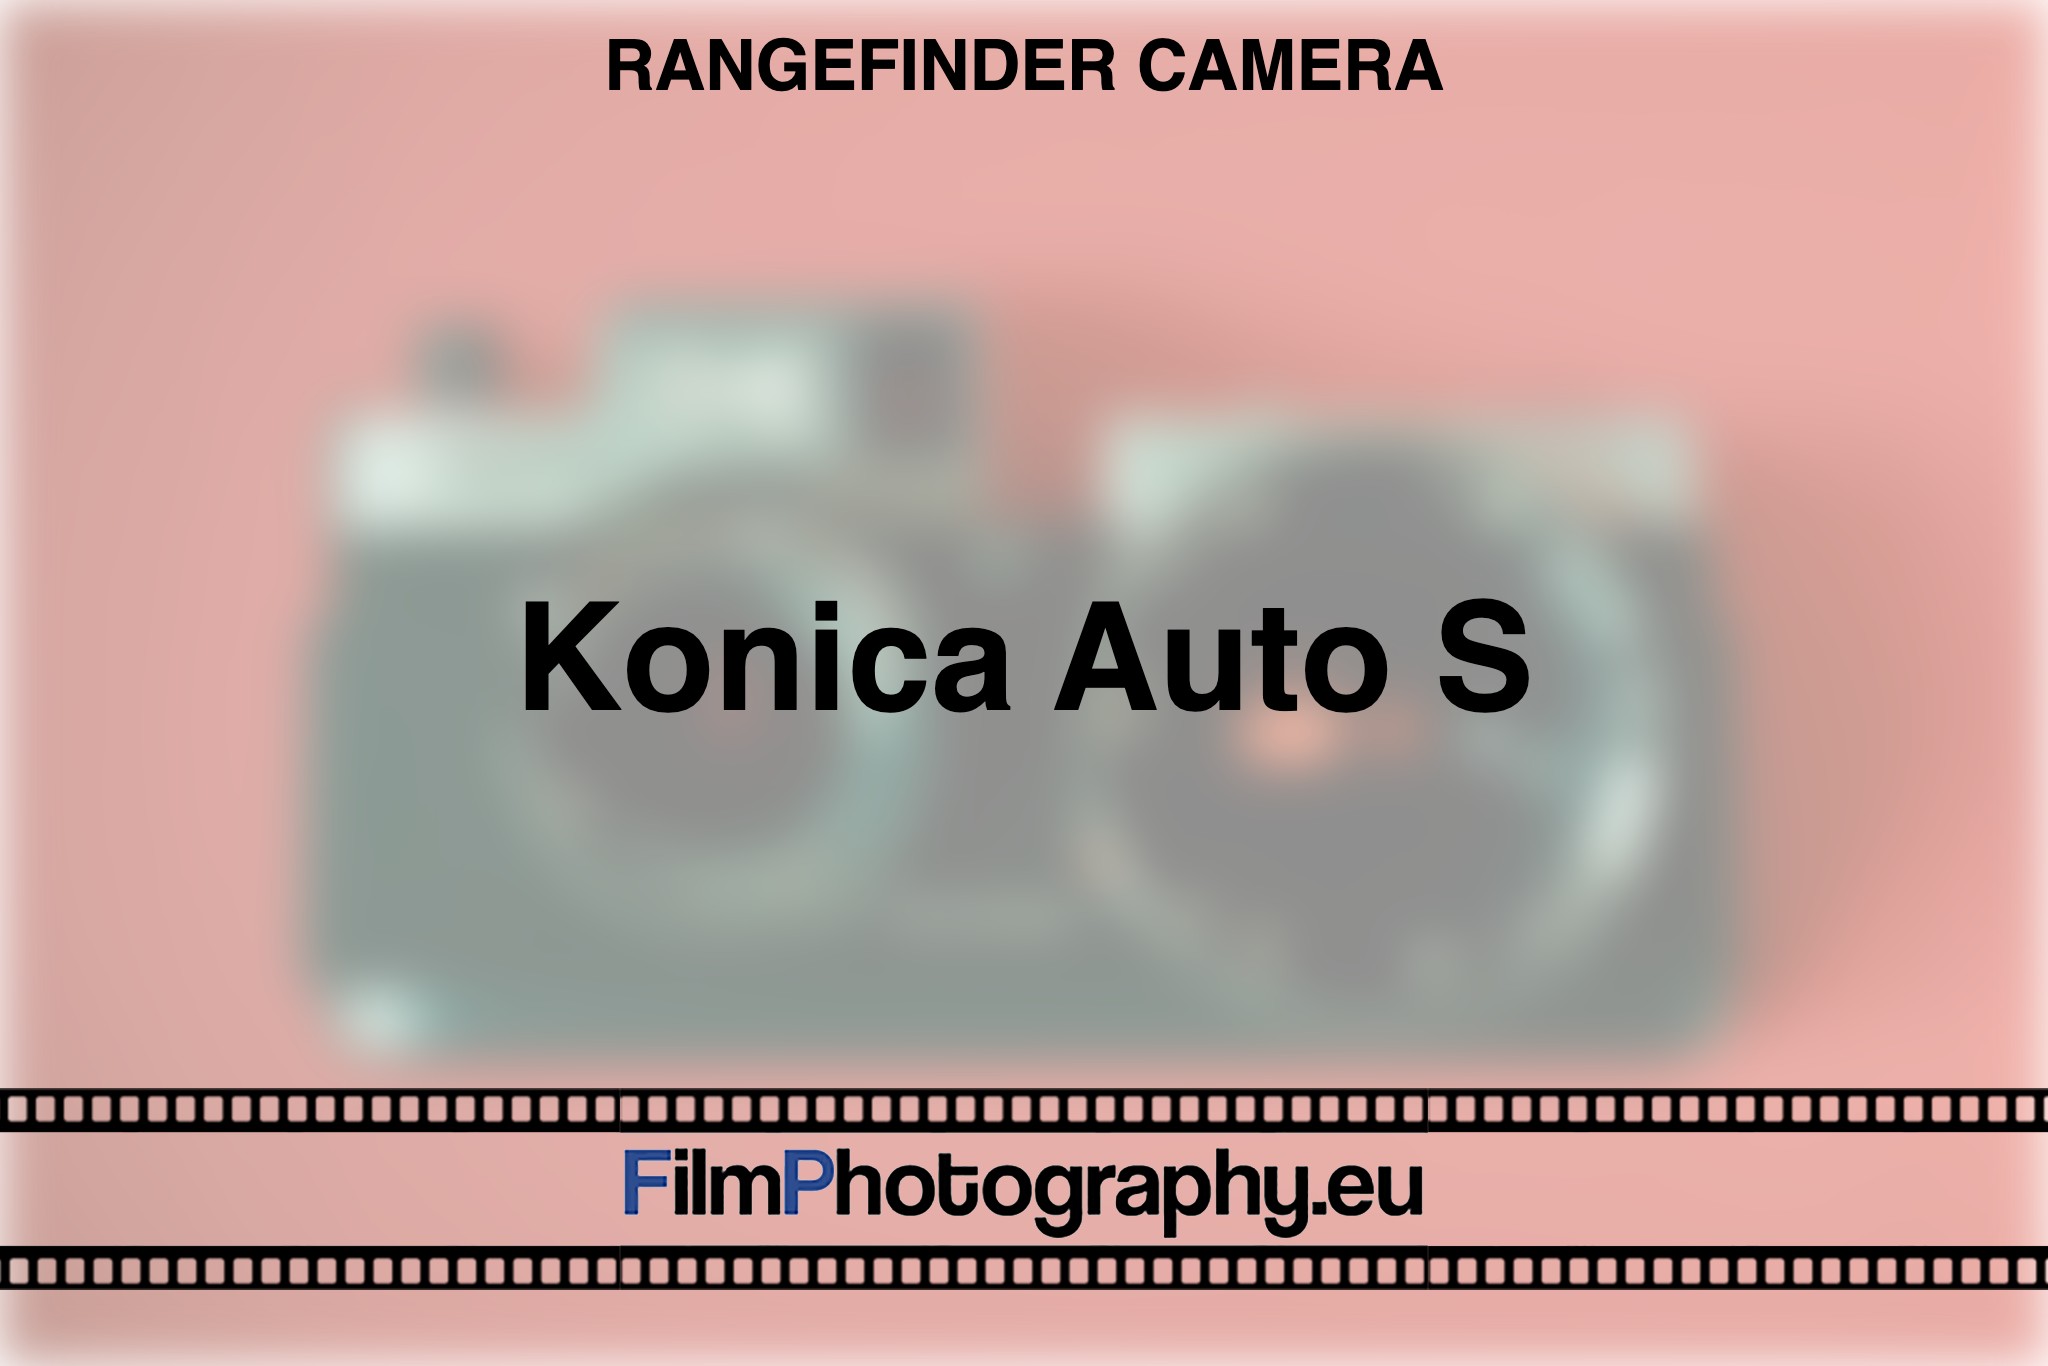 konica-auto-s-rangefinder-camera-bnv